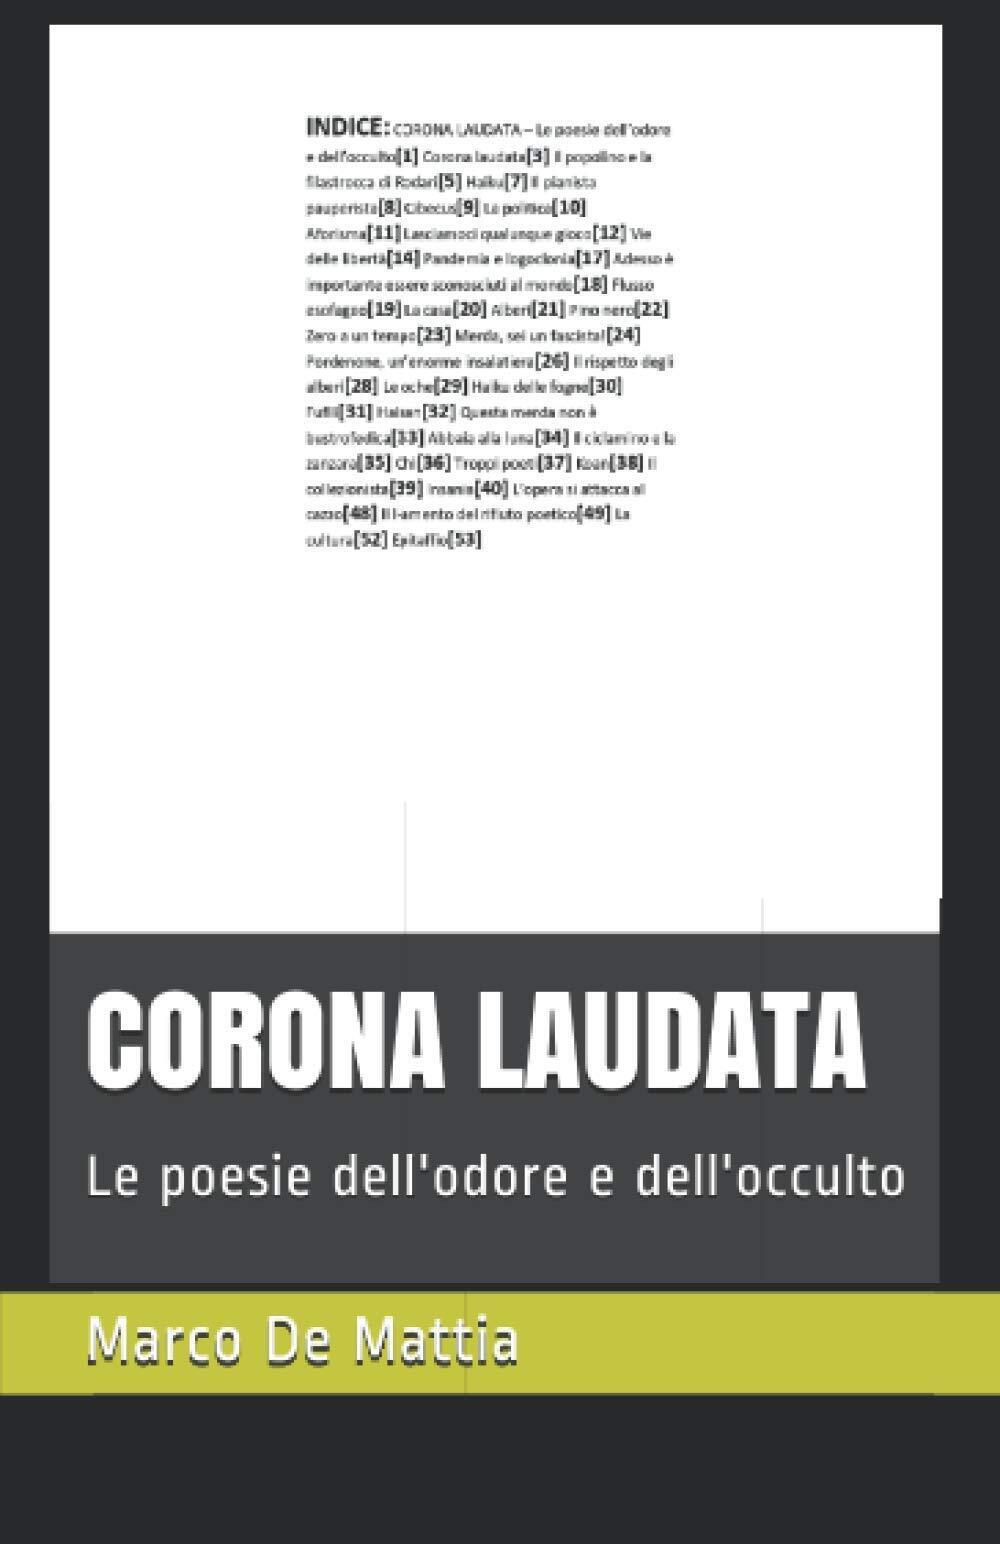 CORONA LAUDATA - Marco De Mattia - Independently Published, 2020